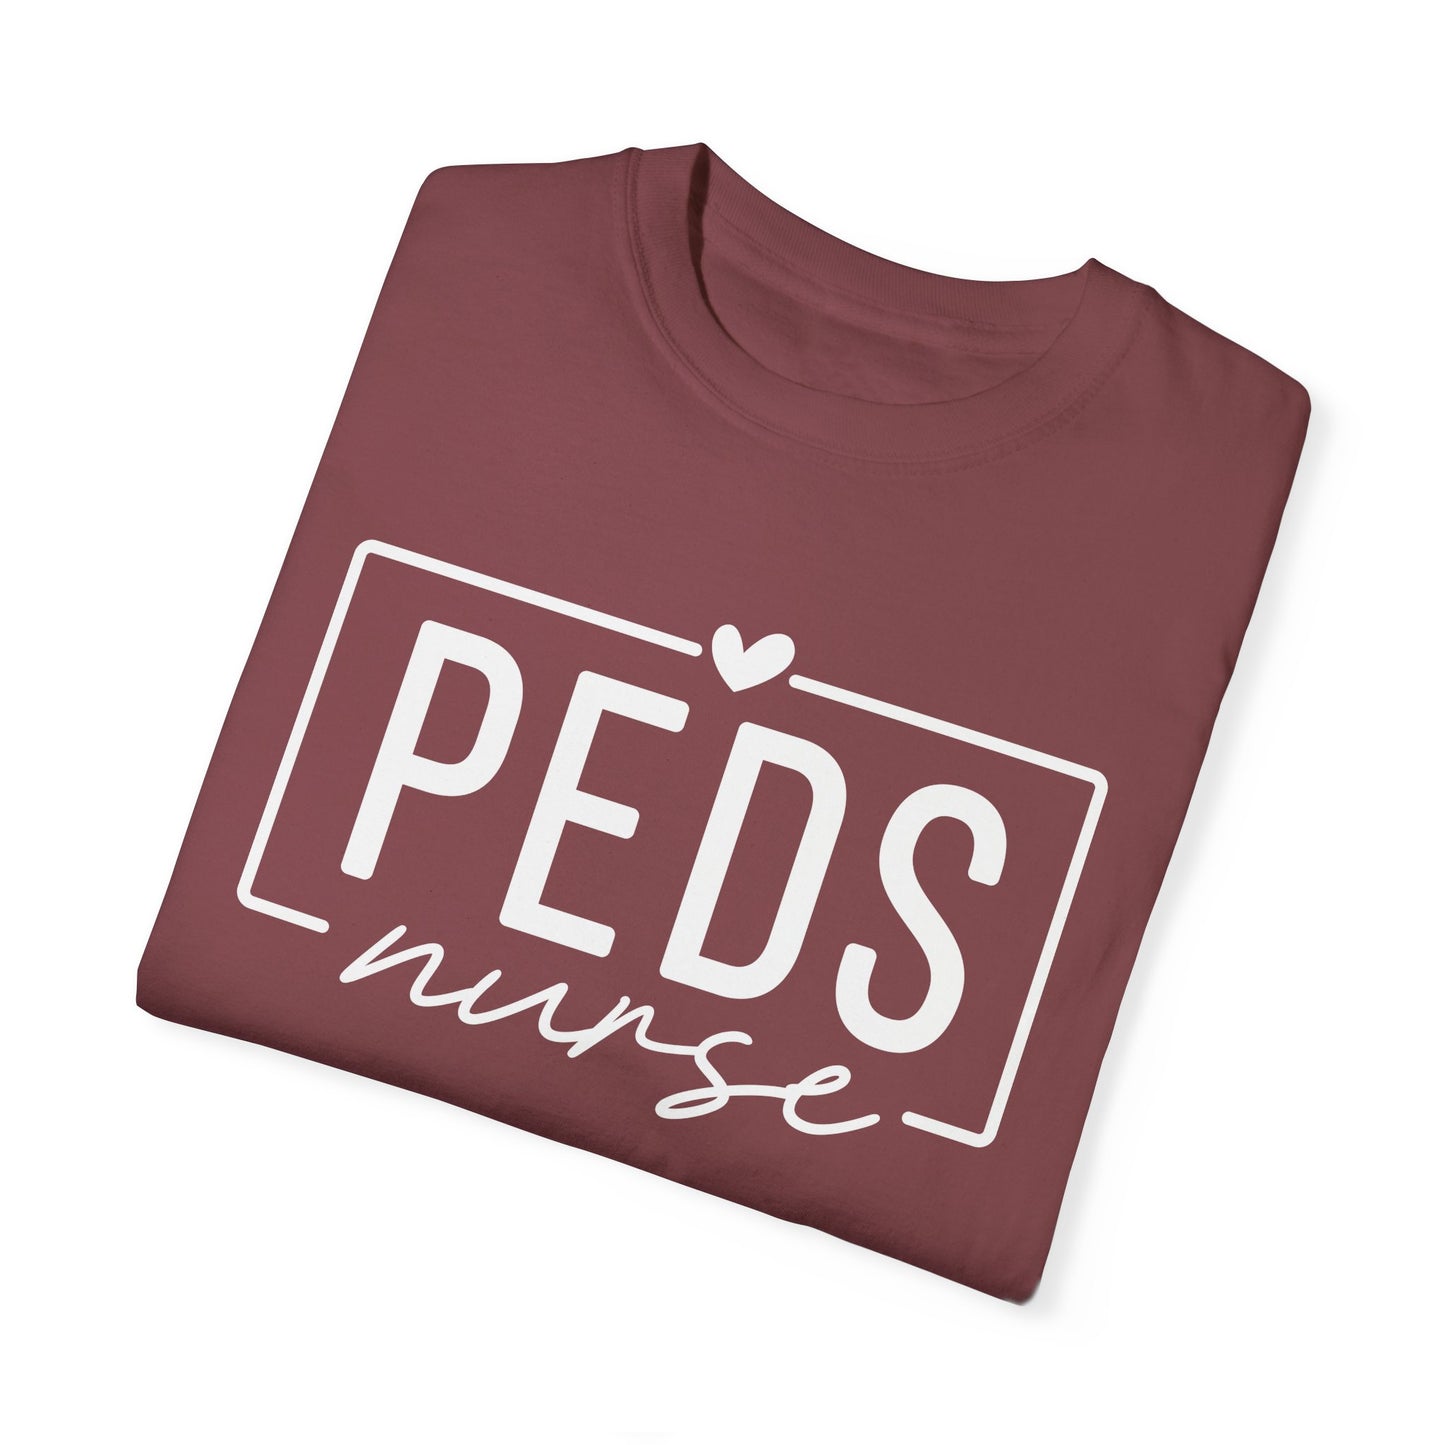 Pediatric Nurse T-Shirt, Peds Nurse Minimalist Design on Comfort Color Shirt, Women Children Nurse Oversized Tee, Registered Nurse Gift Men